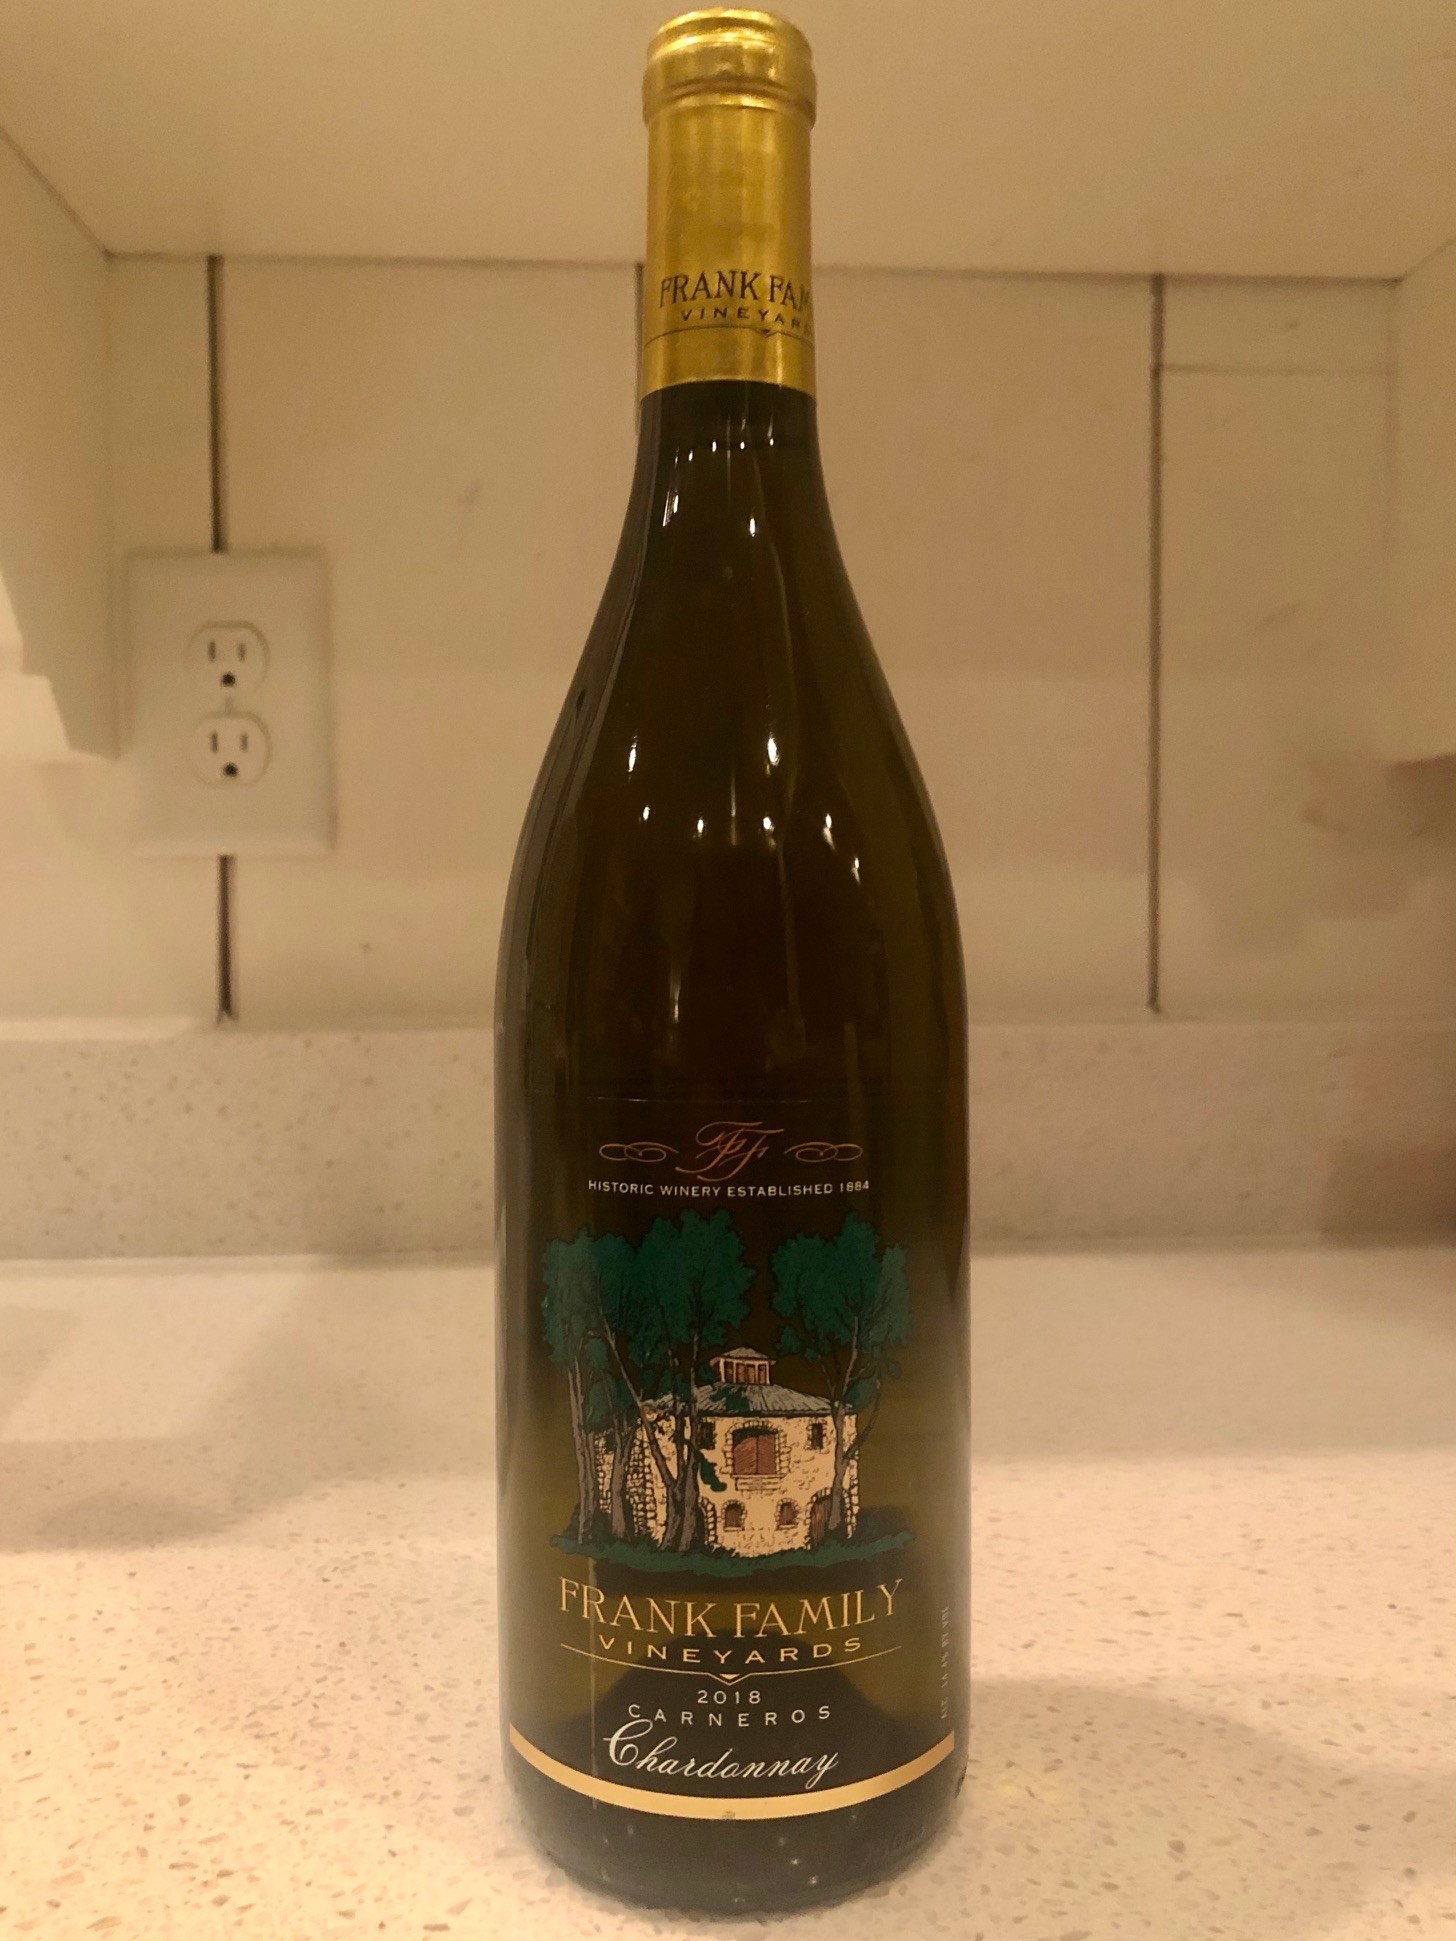 Bottle of Chardonnay